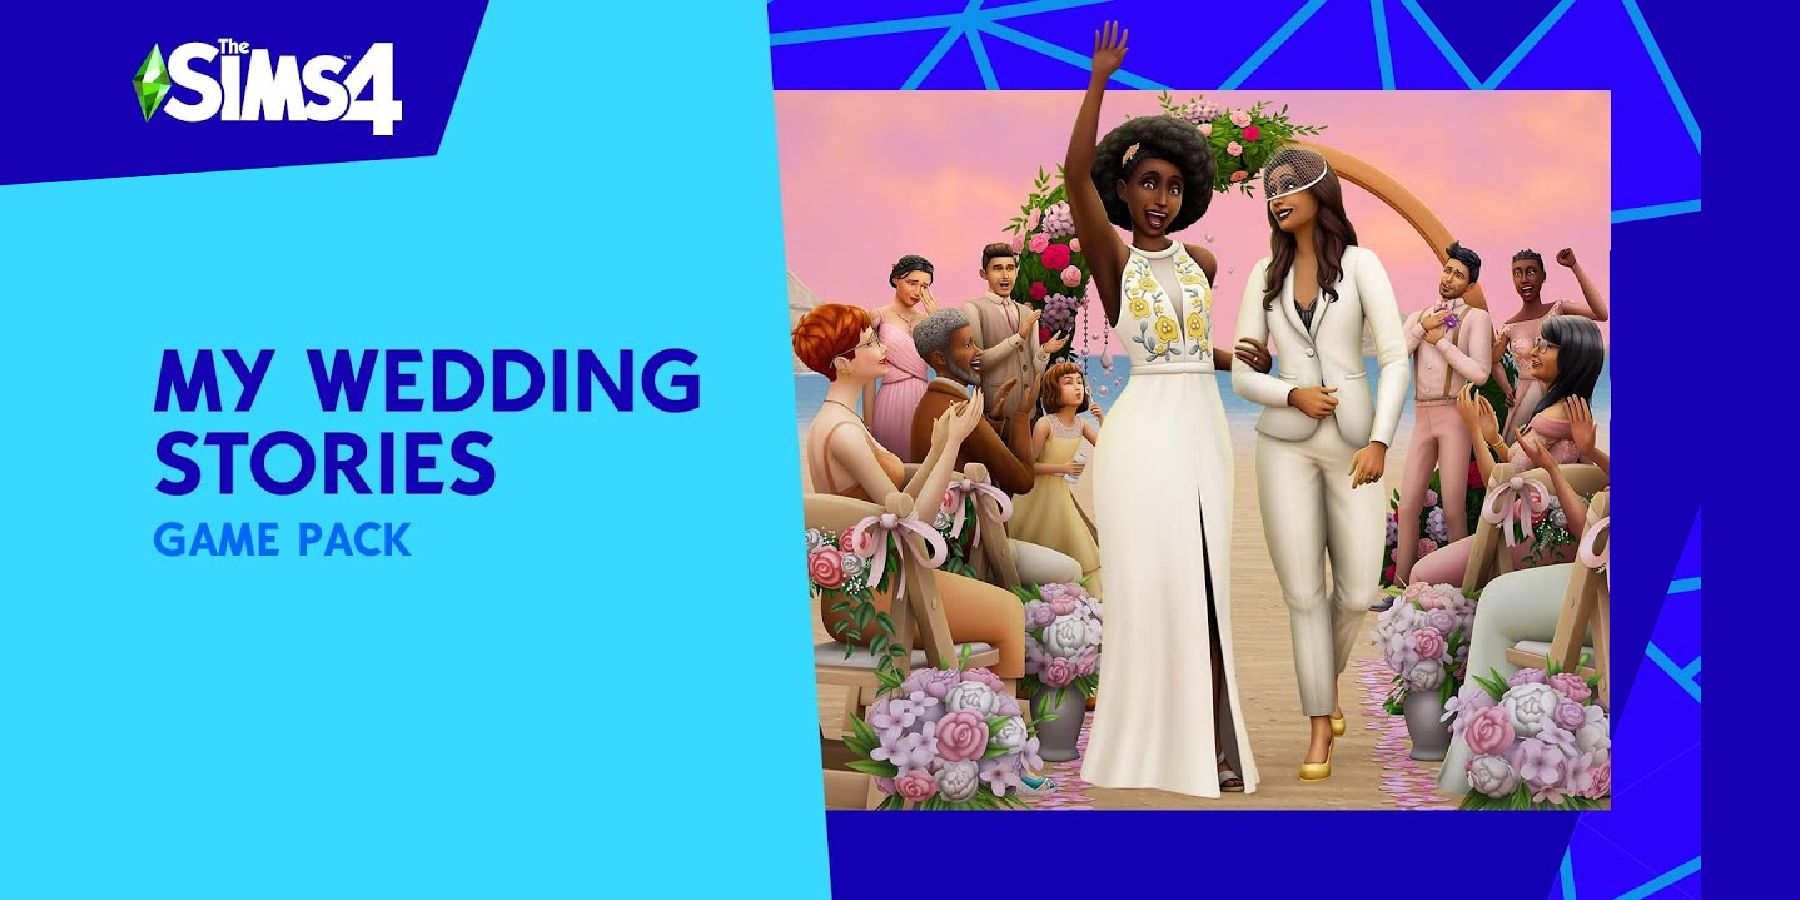 The Sims 4 Announces Wedding DLC